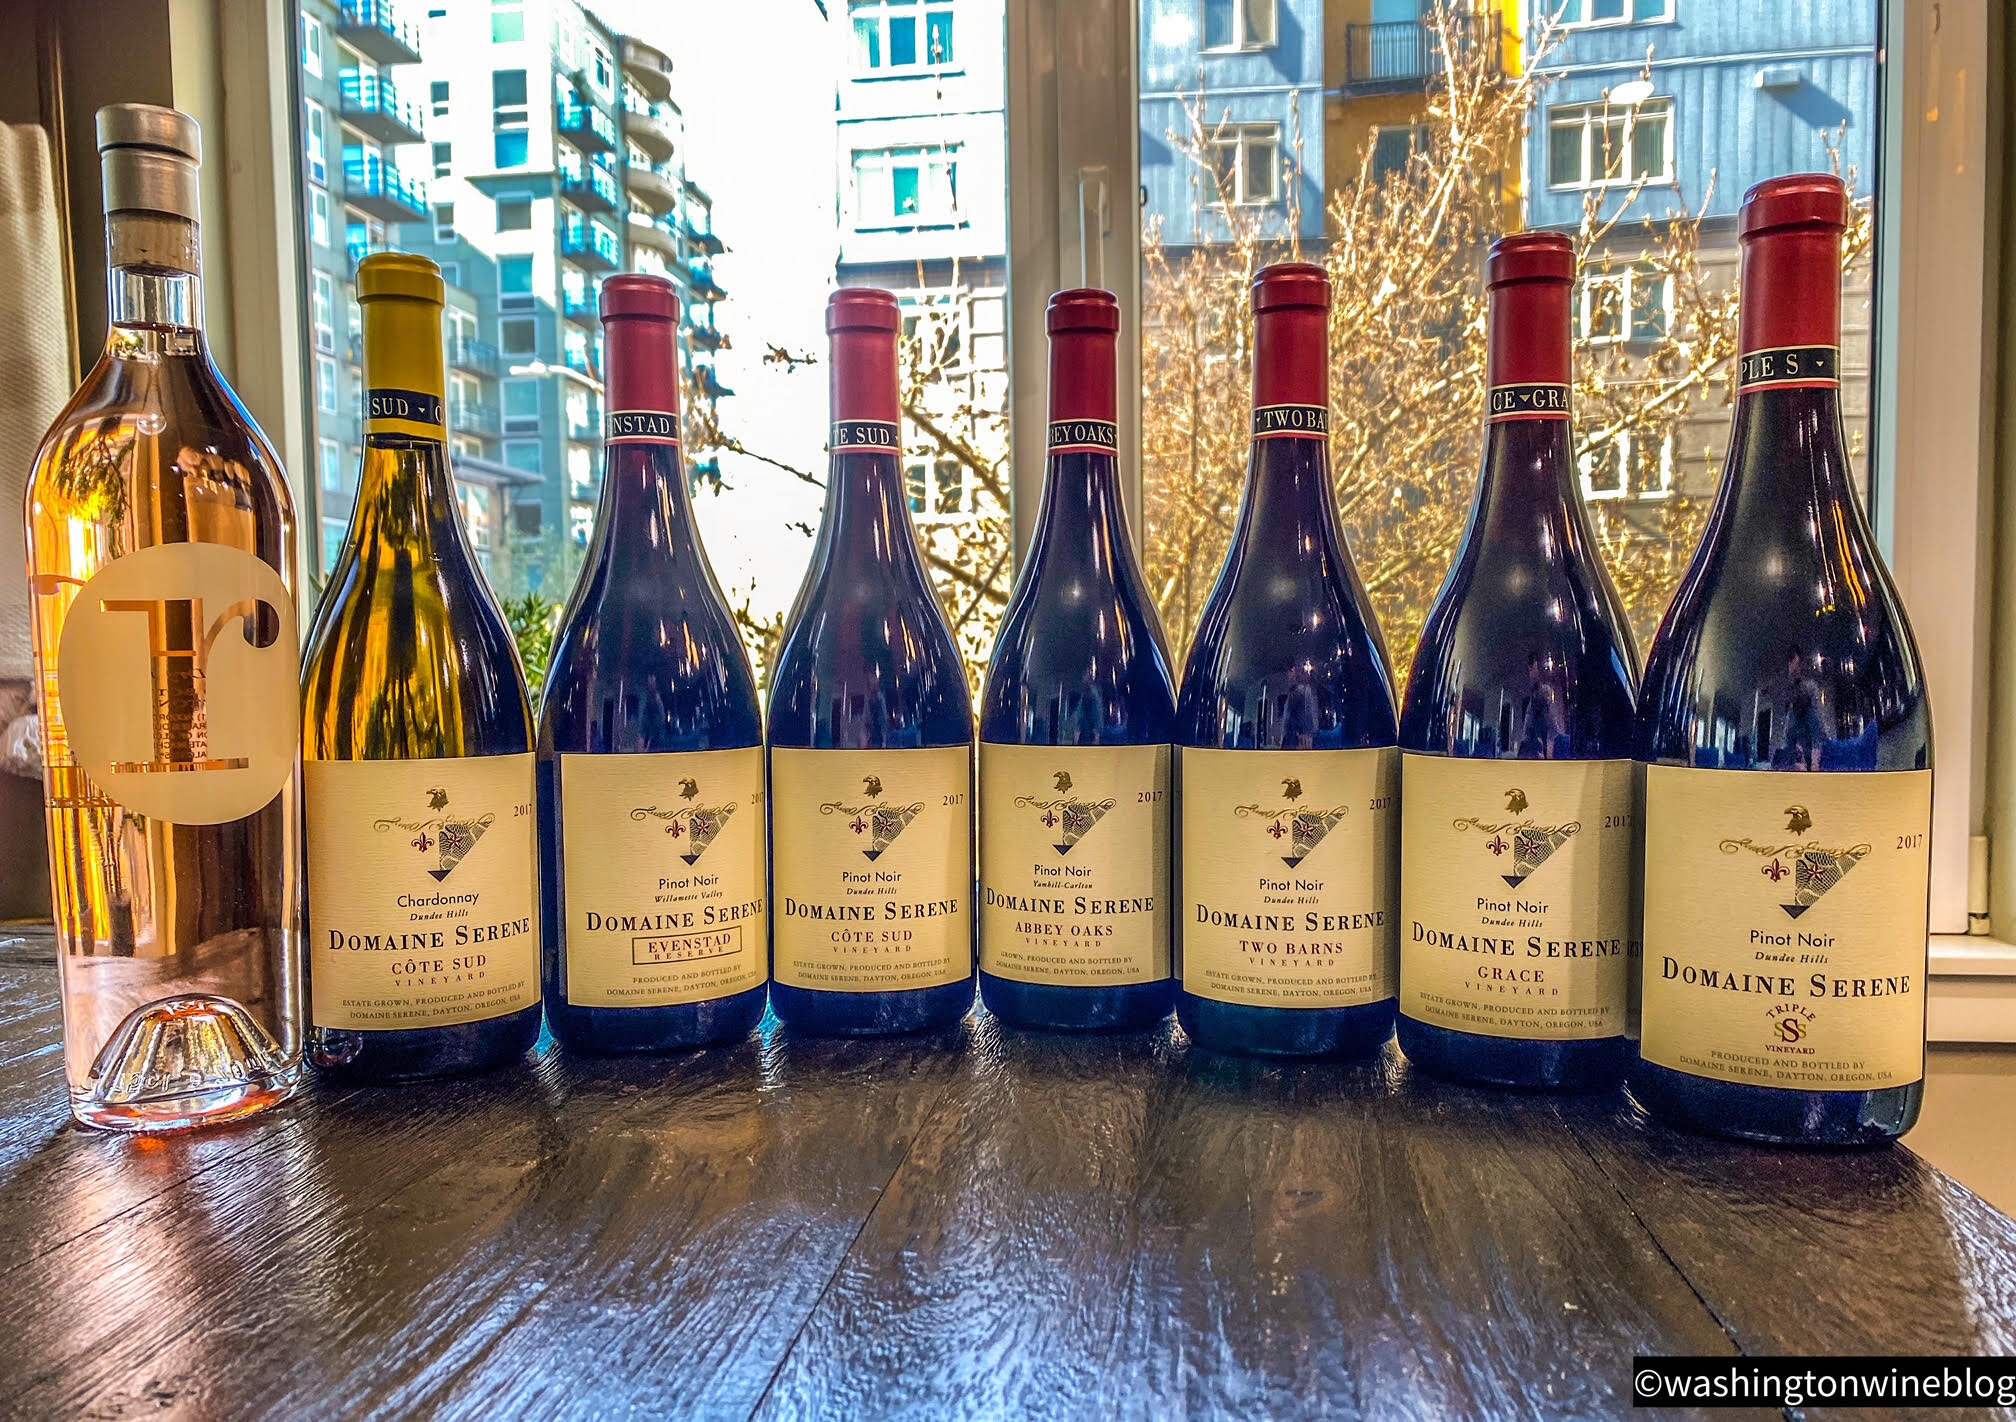 Domaine Serene wine bottle lineup photo by Owen Bargreen